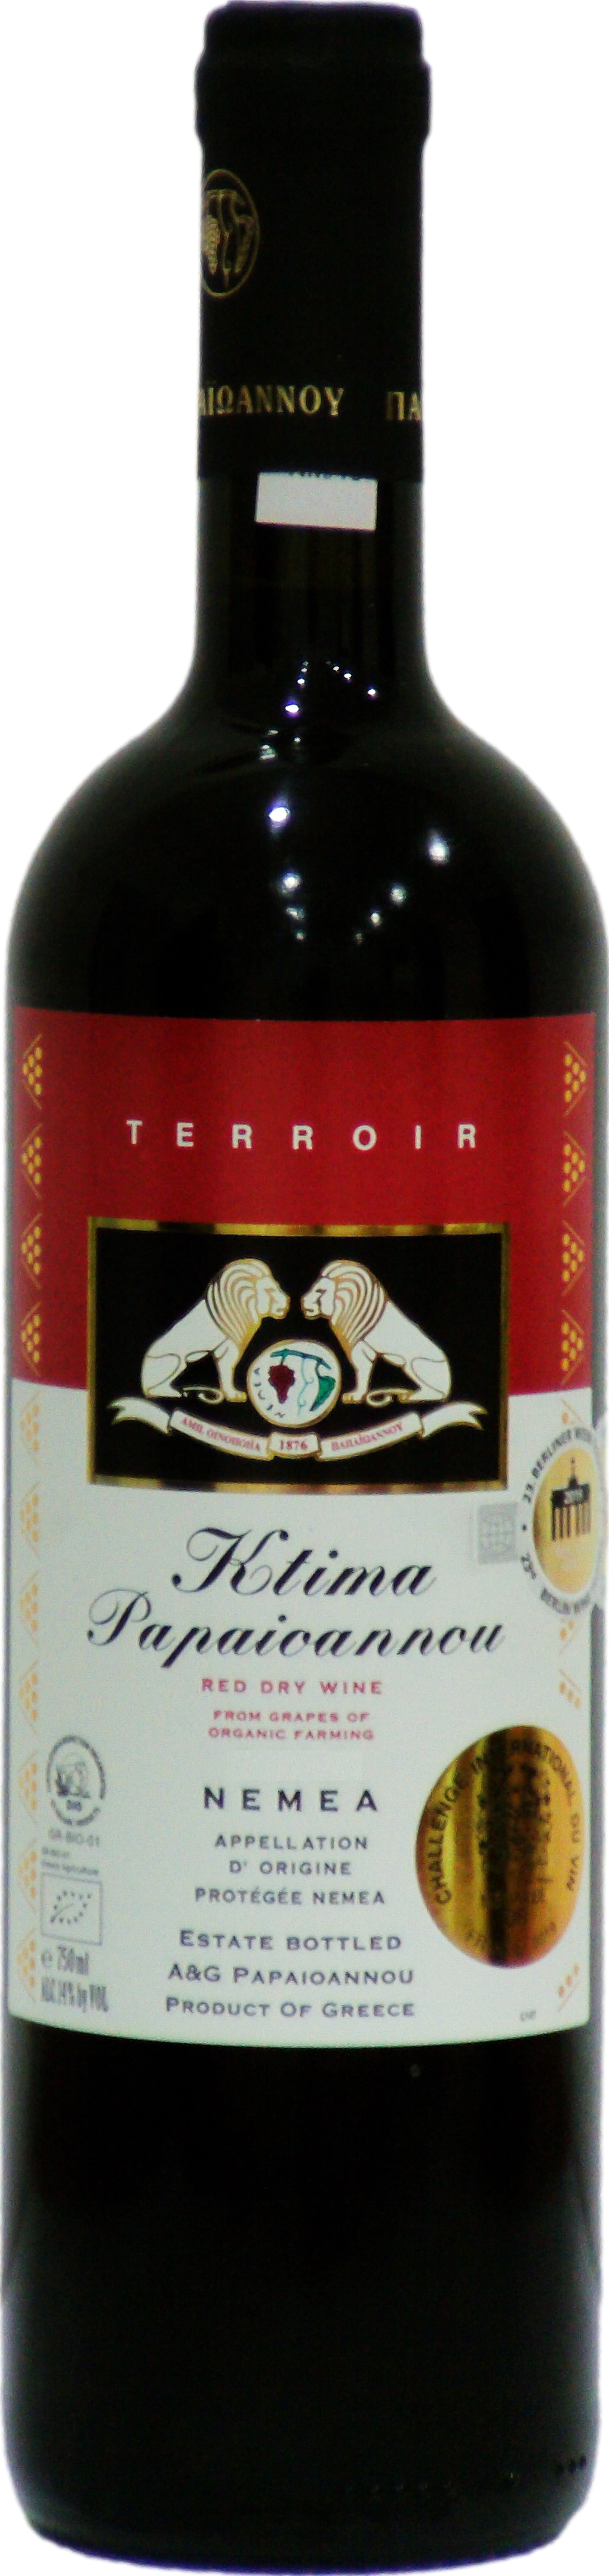 Product image of Ktima Papaioannou Terroir Nemea 2014 from 8wines